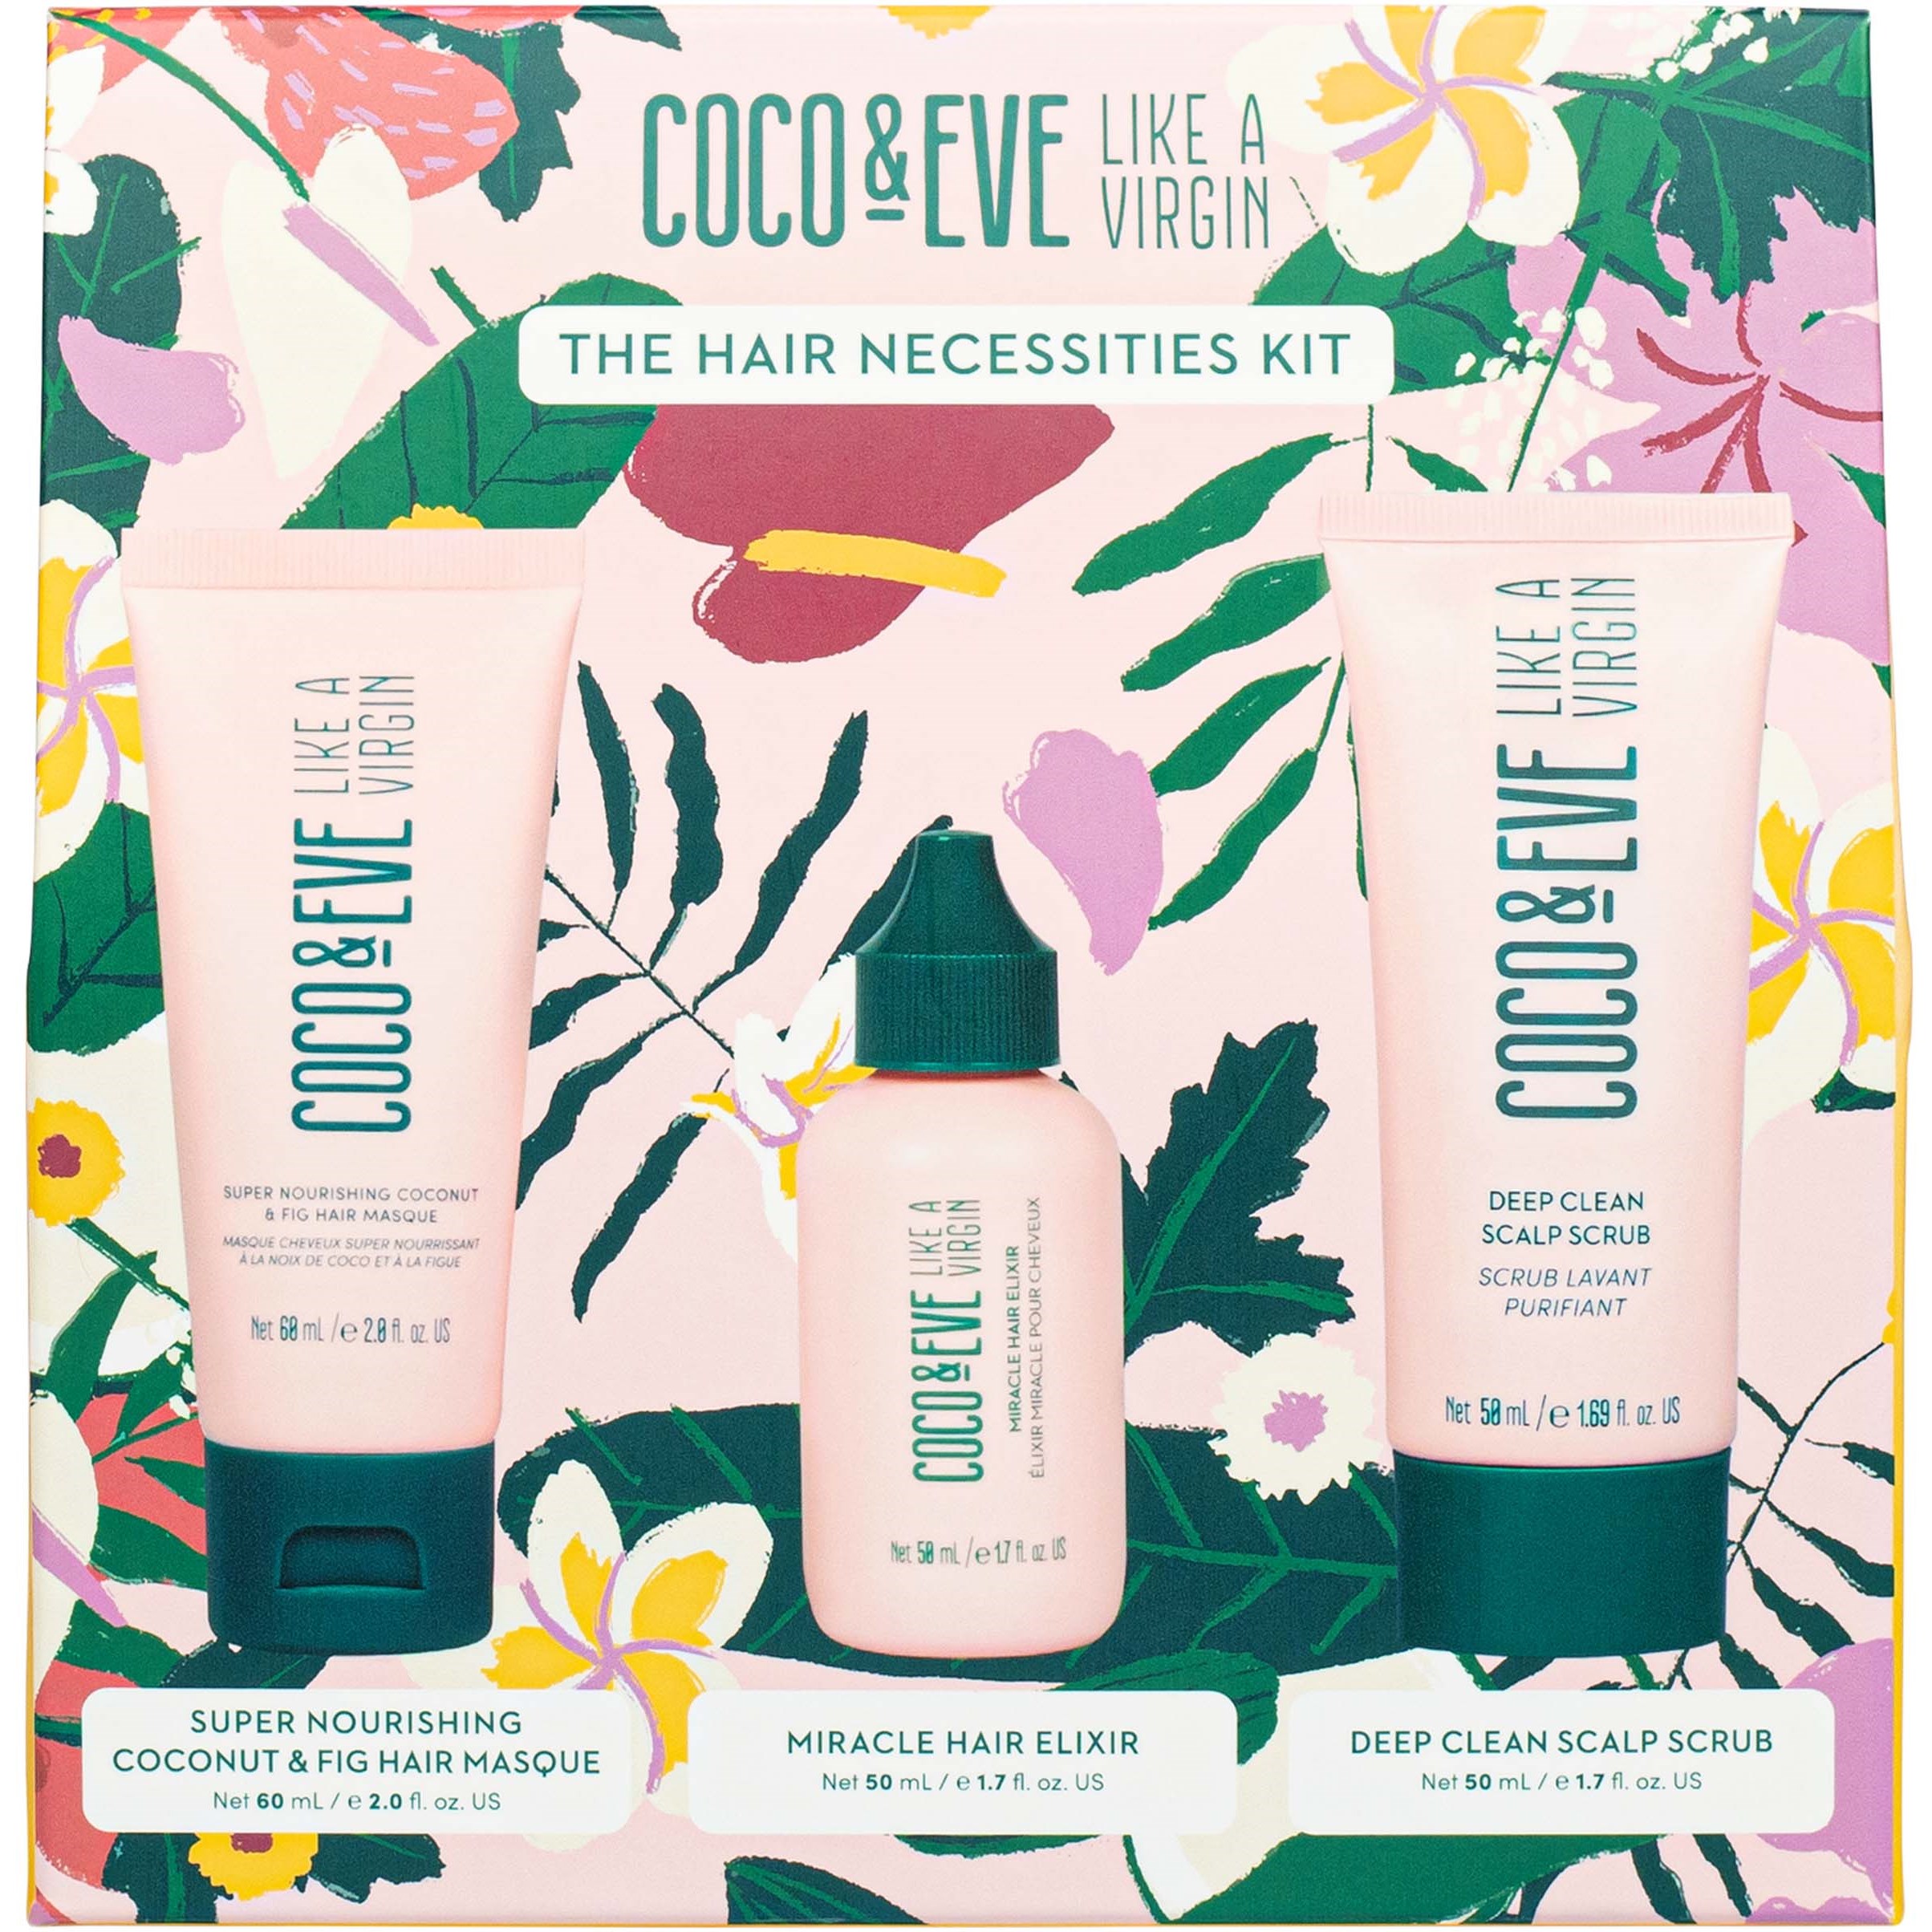 Coco & Eve Like a Virgin The Hair Necessities Kit